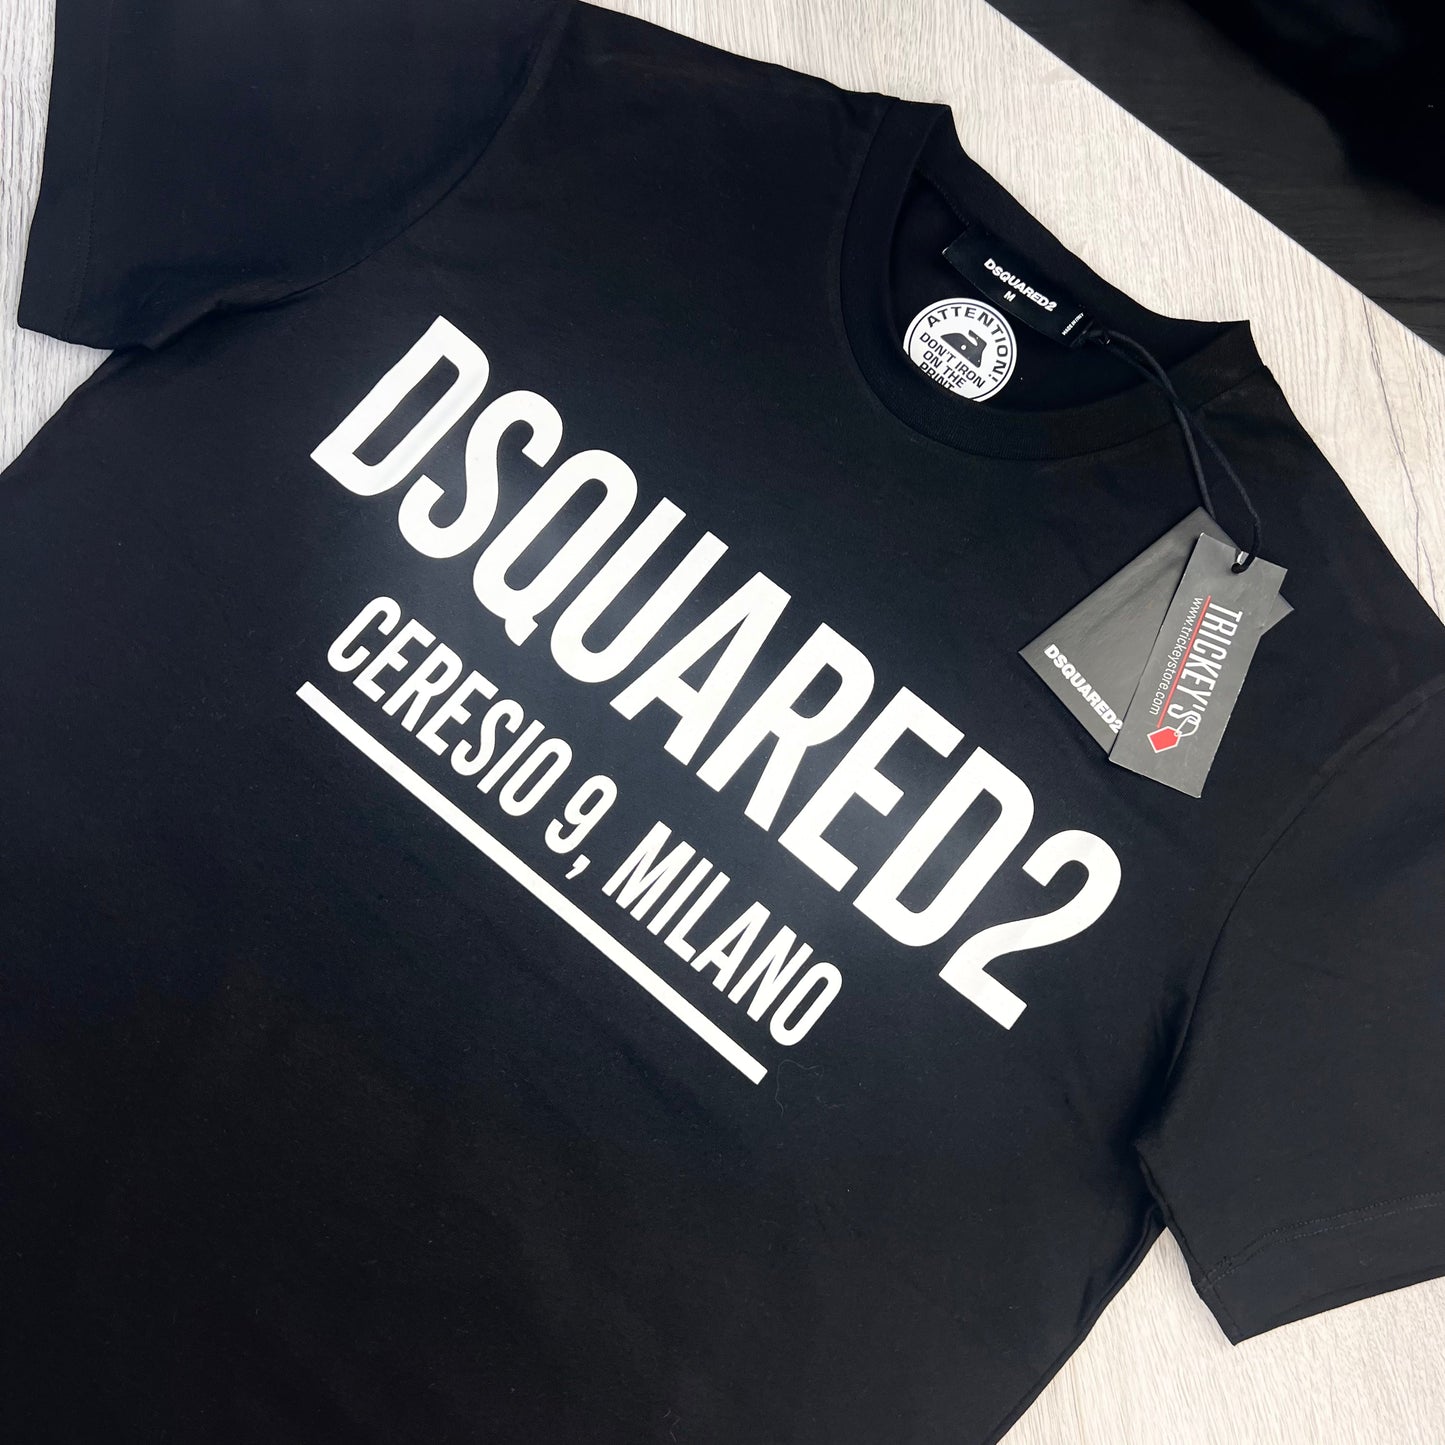 Dsquared2 Ceresio 9, Milano Men’s Black T-shirt